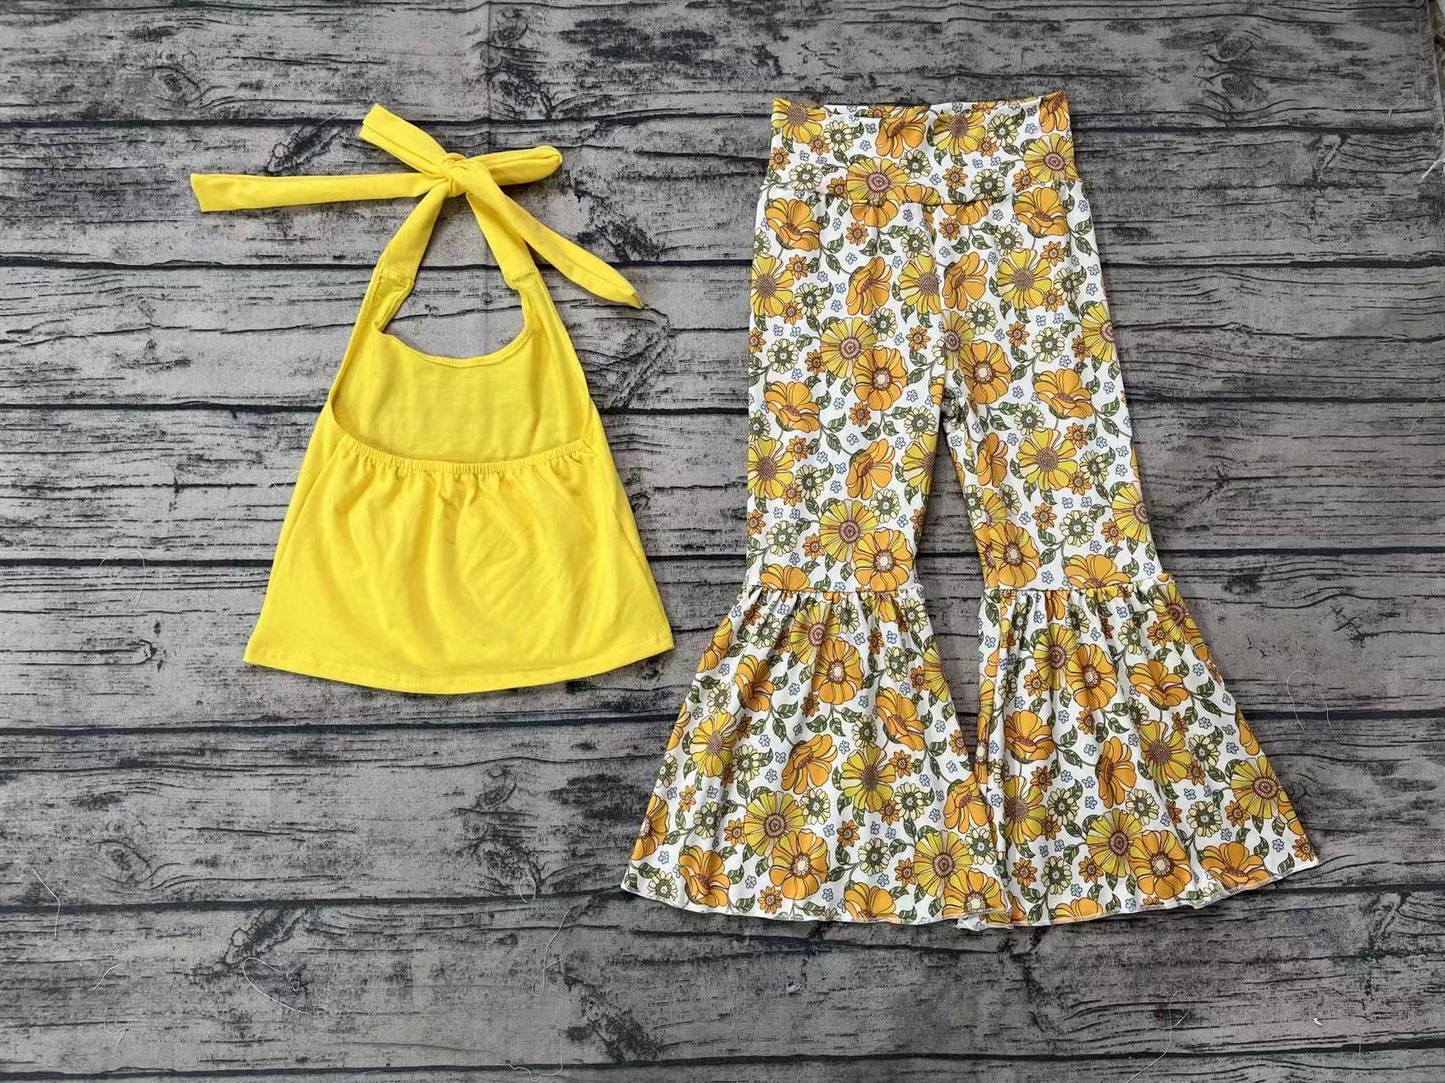 Baby Girls Mustard Halter Top Shirt Flowers Bell Bottom Pants Clothes Sets